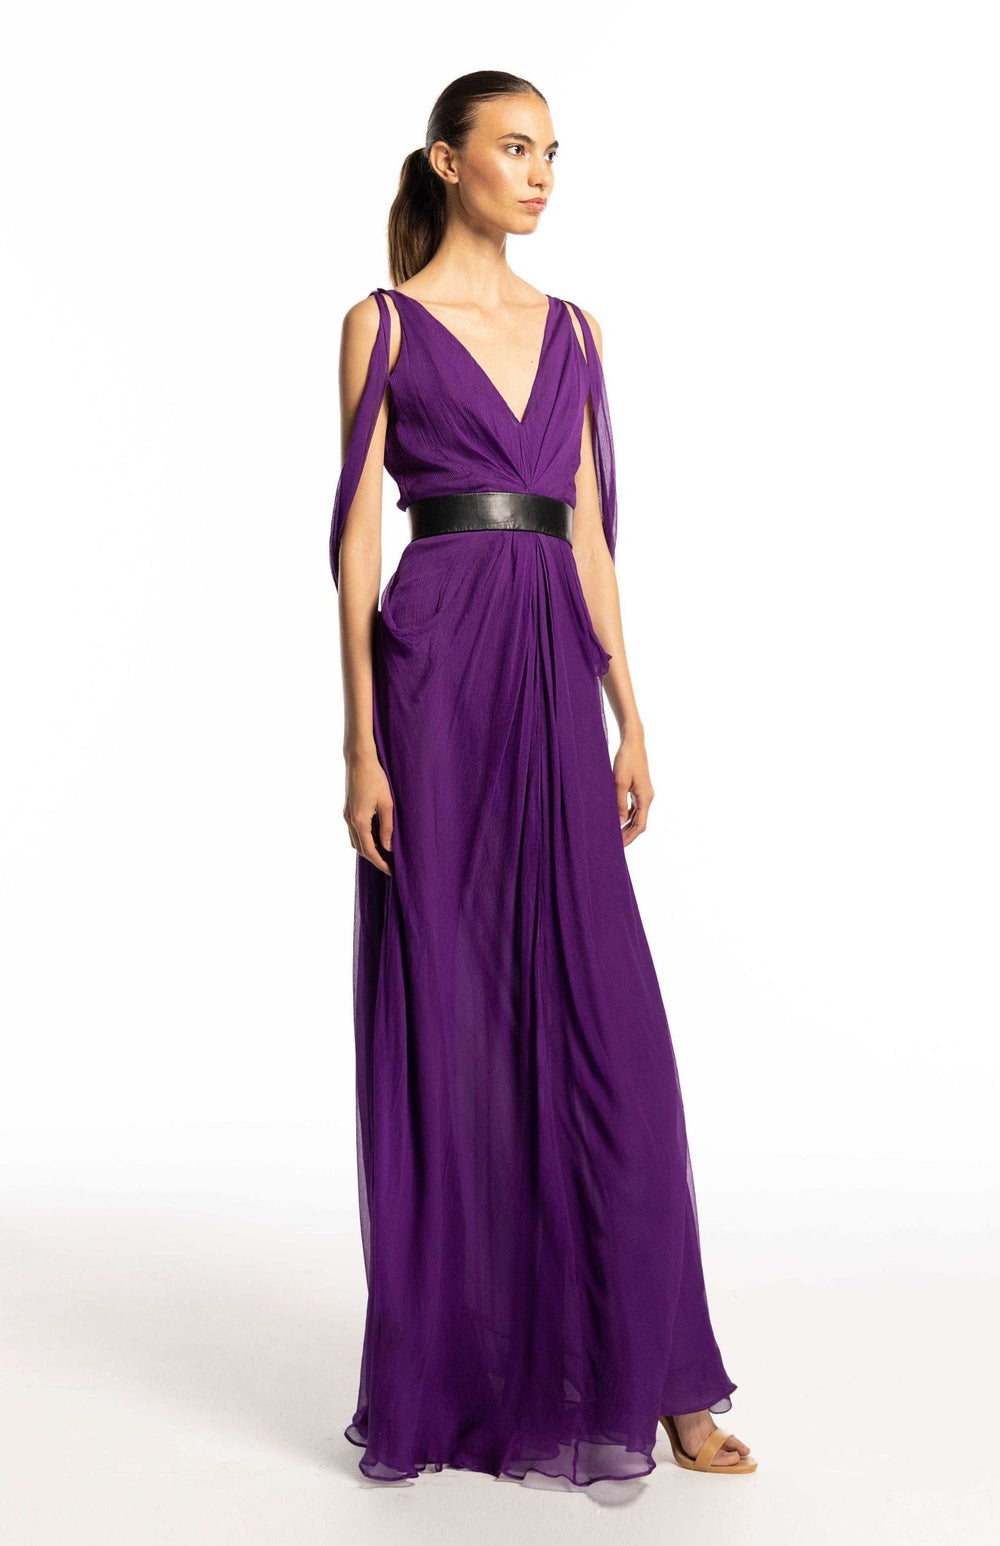  long silk dress in plum color